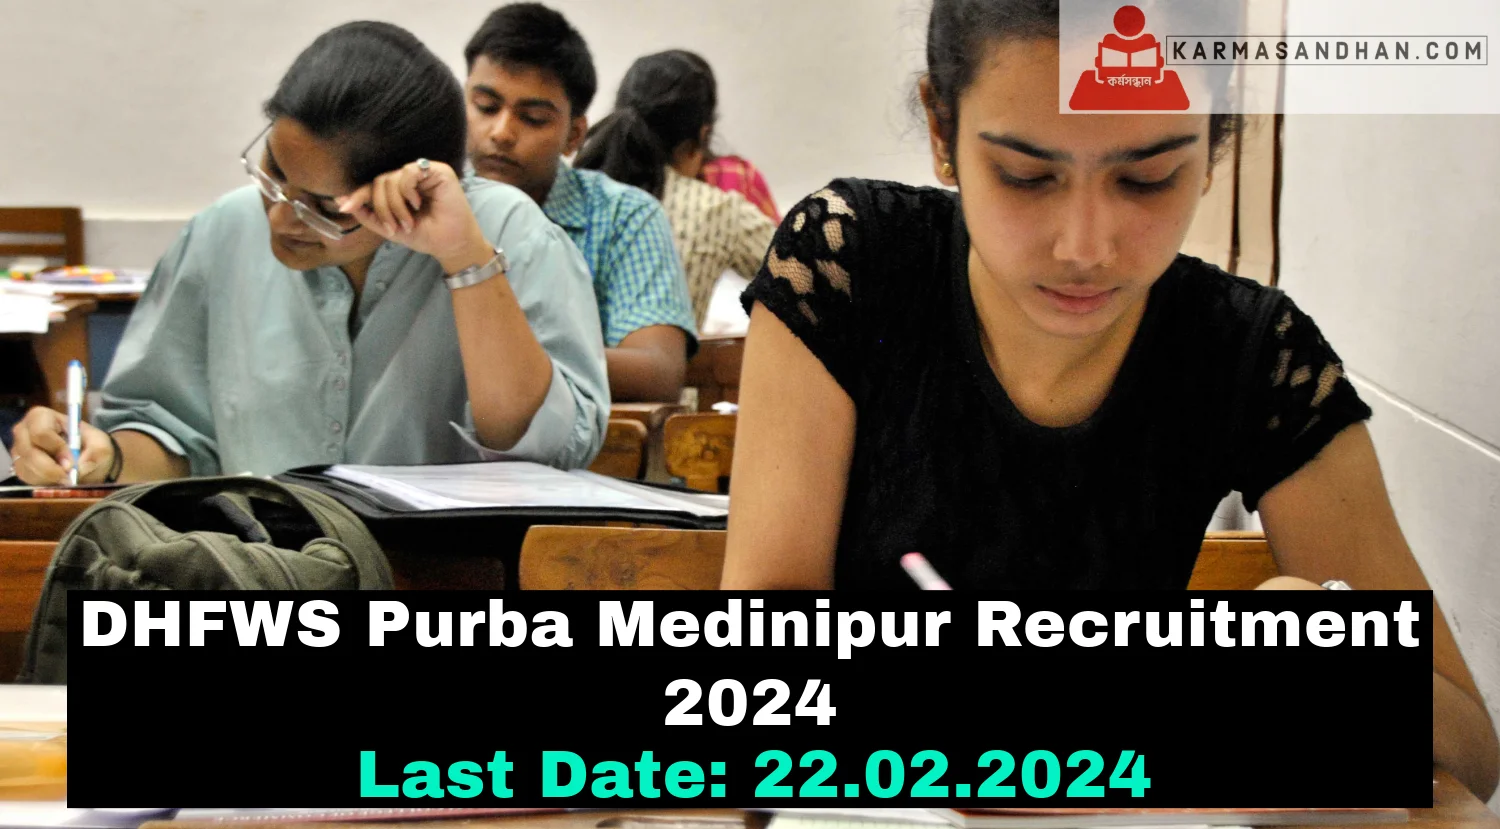 DHFWS Purba Medinipur Recruitment 2024 for Various Vacancies